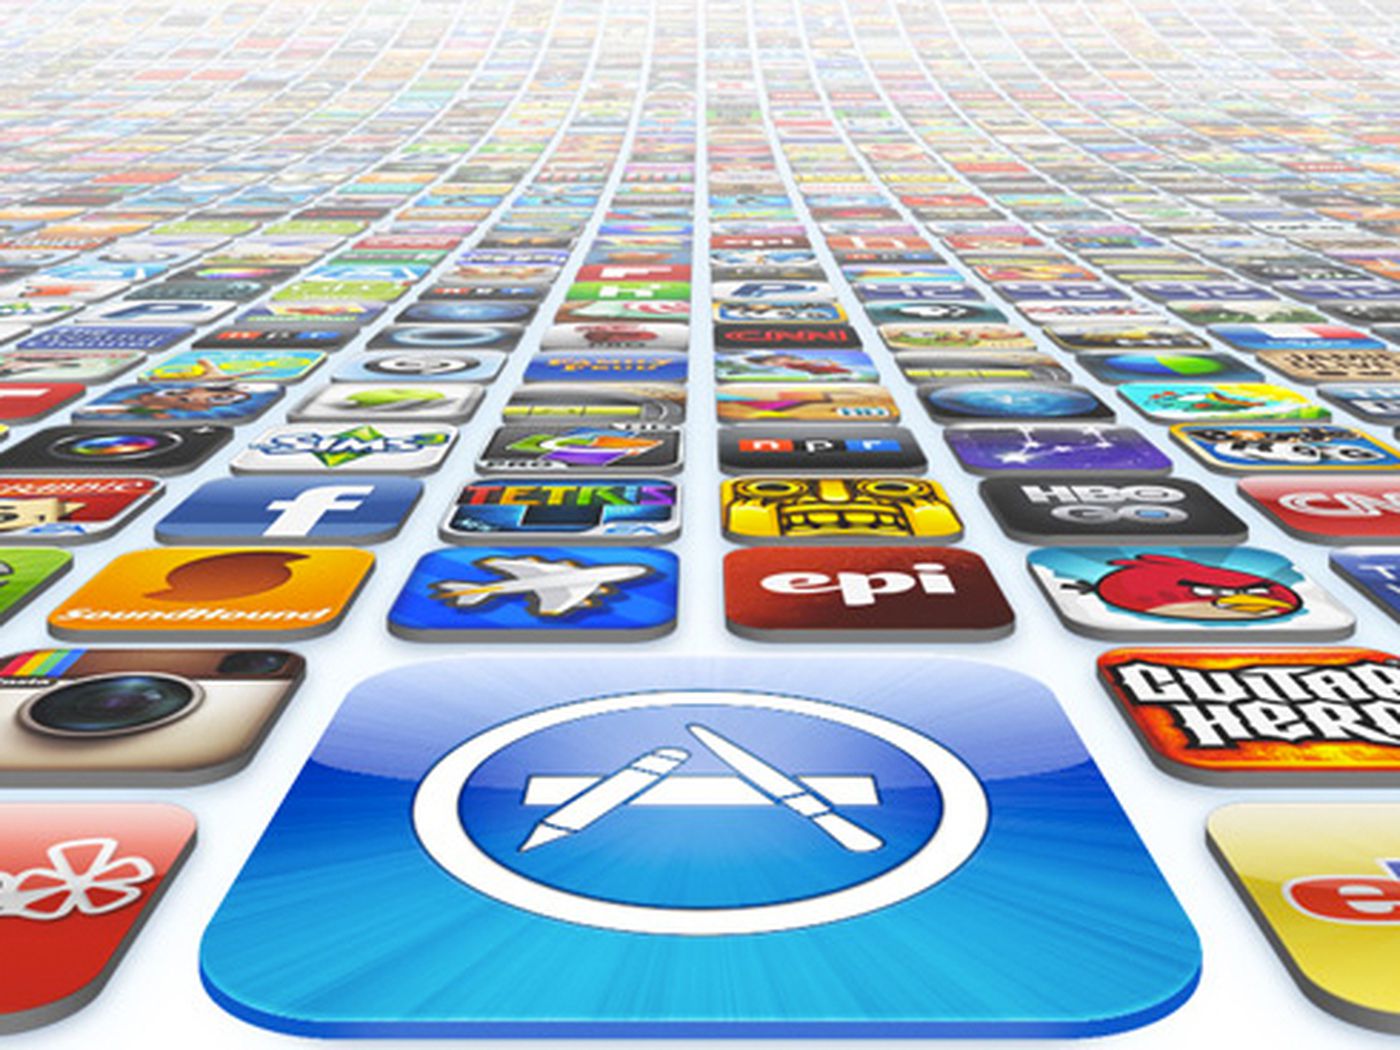 App free apple games